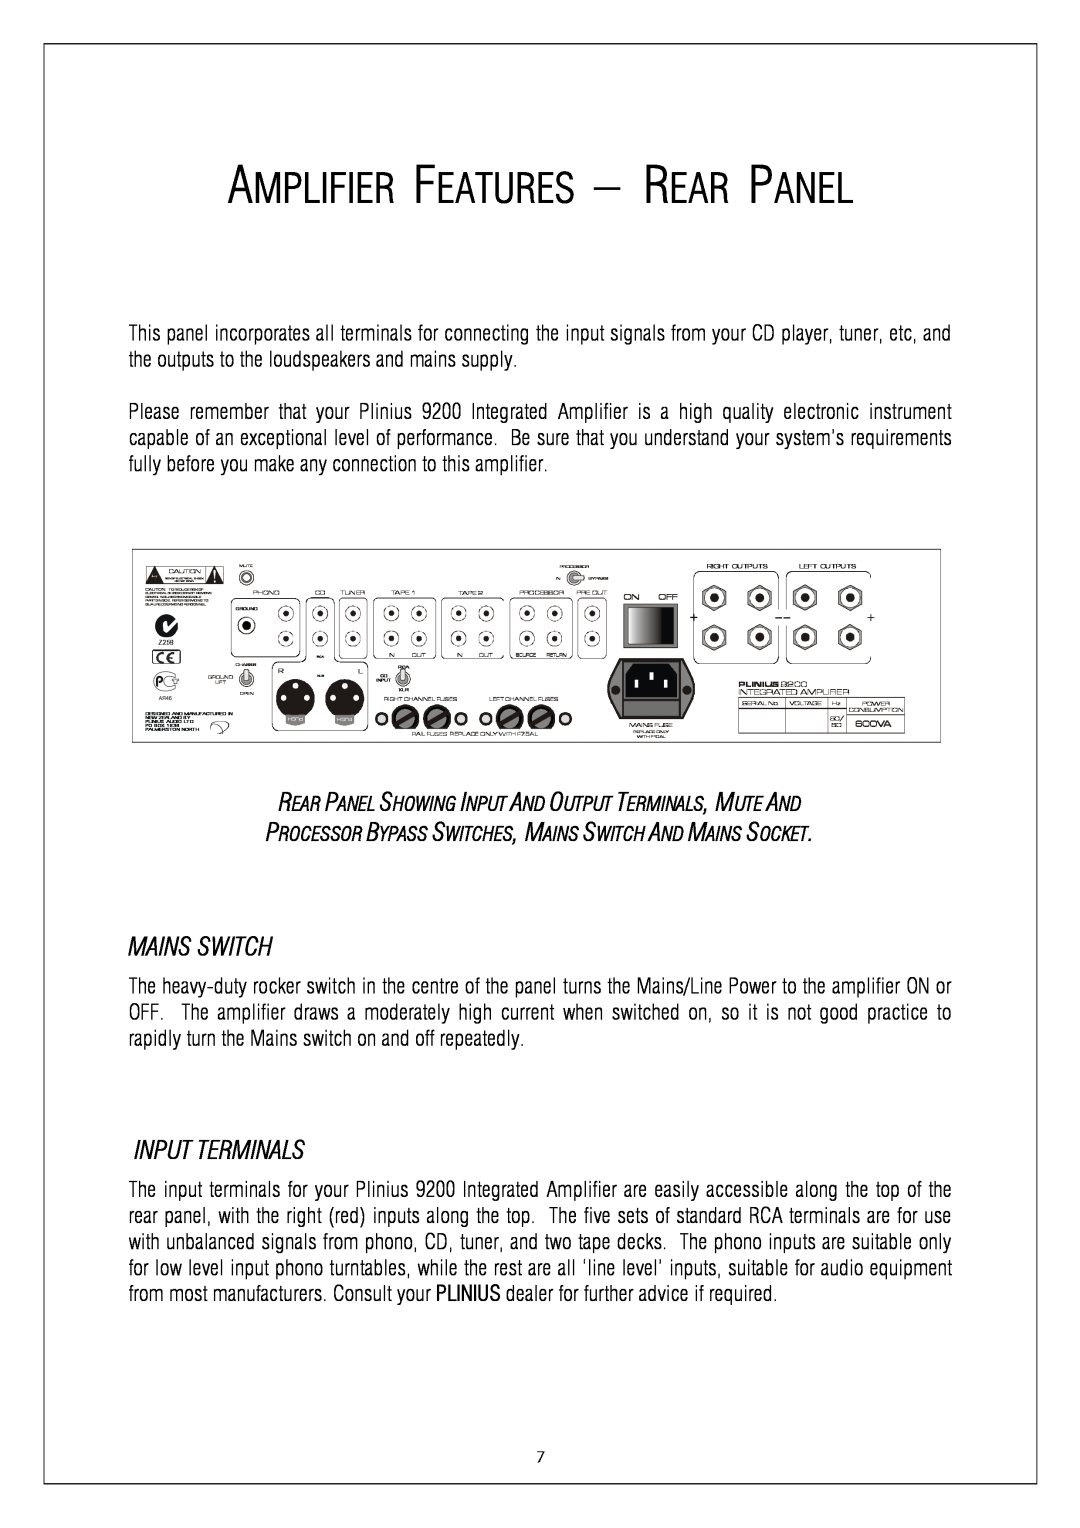 Plinius Audio 9200 manual Amplifier Features - Rear Panel, Mains Switch, Input Terminals 